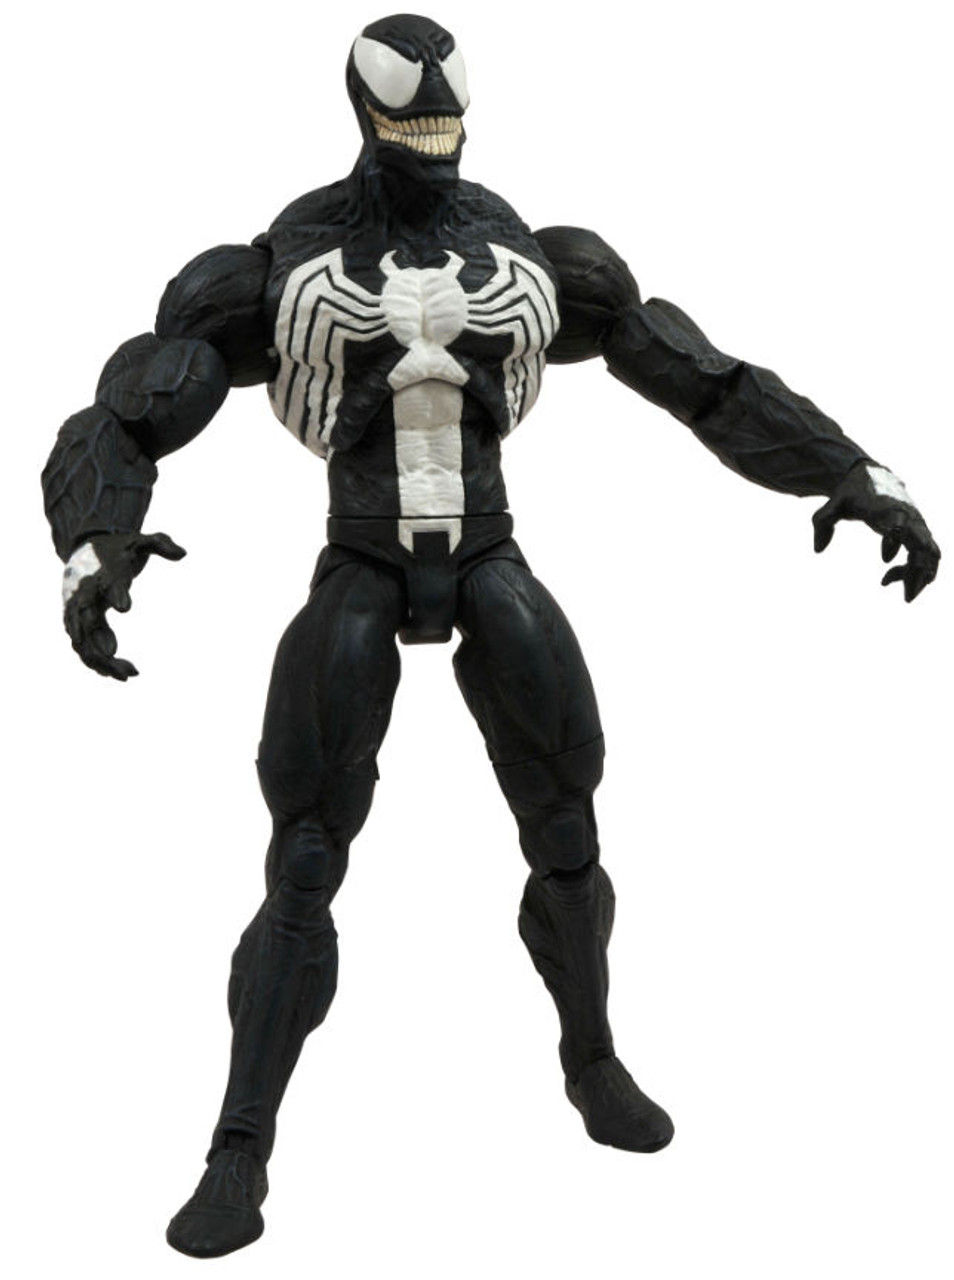 Diamond Select Toys Marvel Gallery Venom Comic 9 Inch PVC Diorama Figure  black